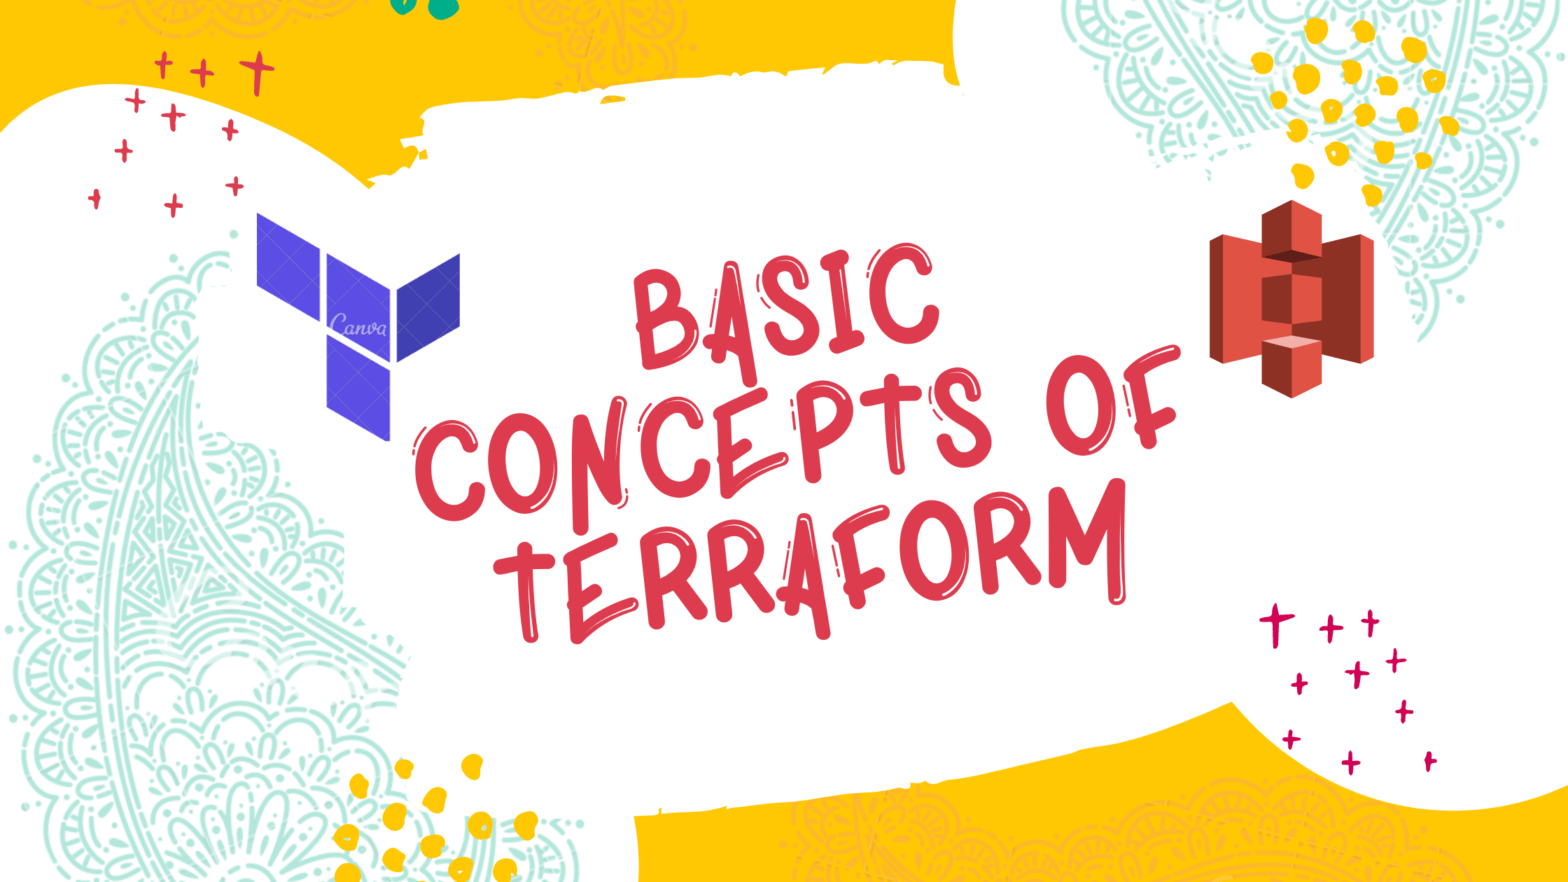 Basic concepts of Terraform